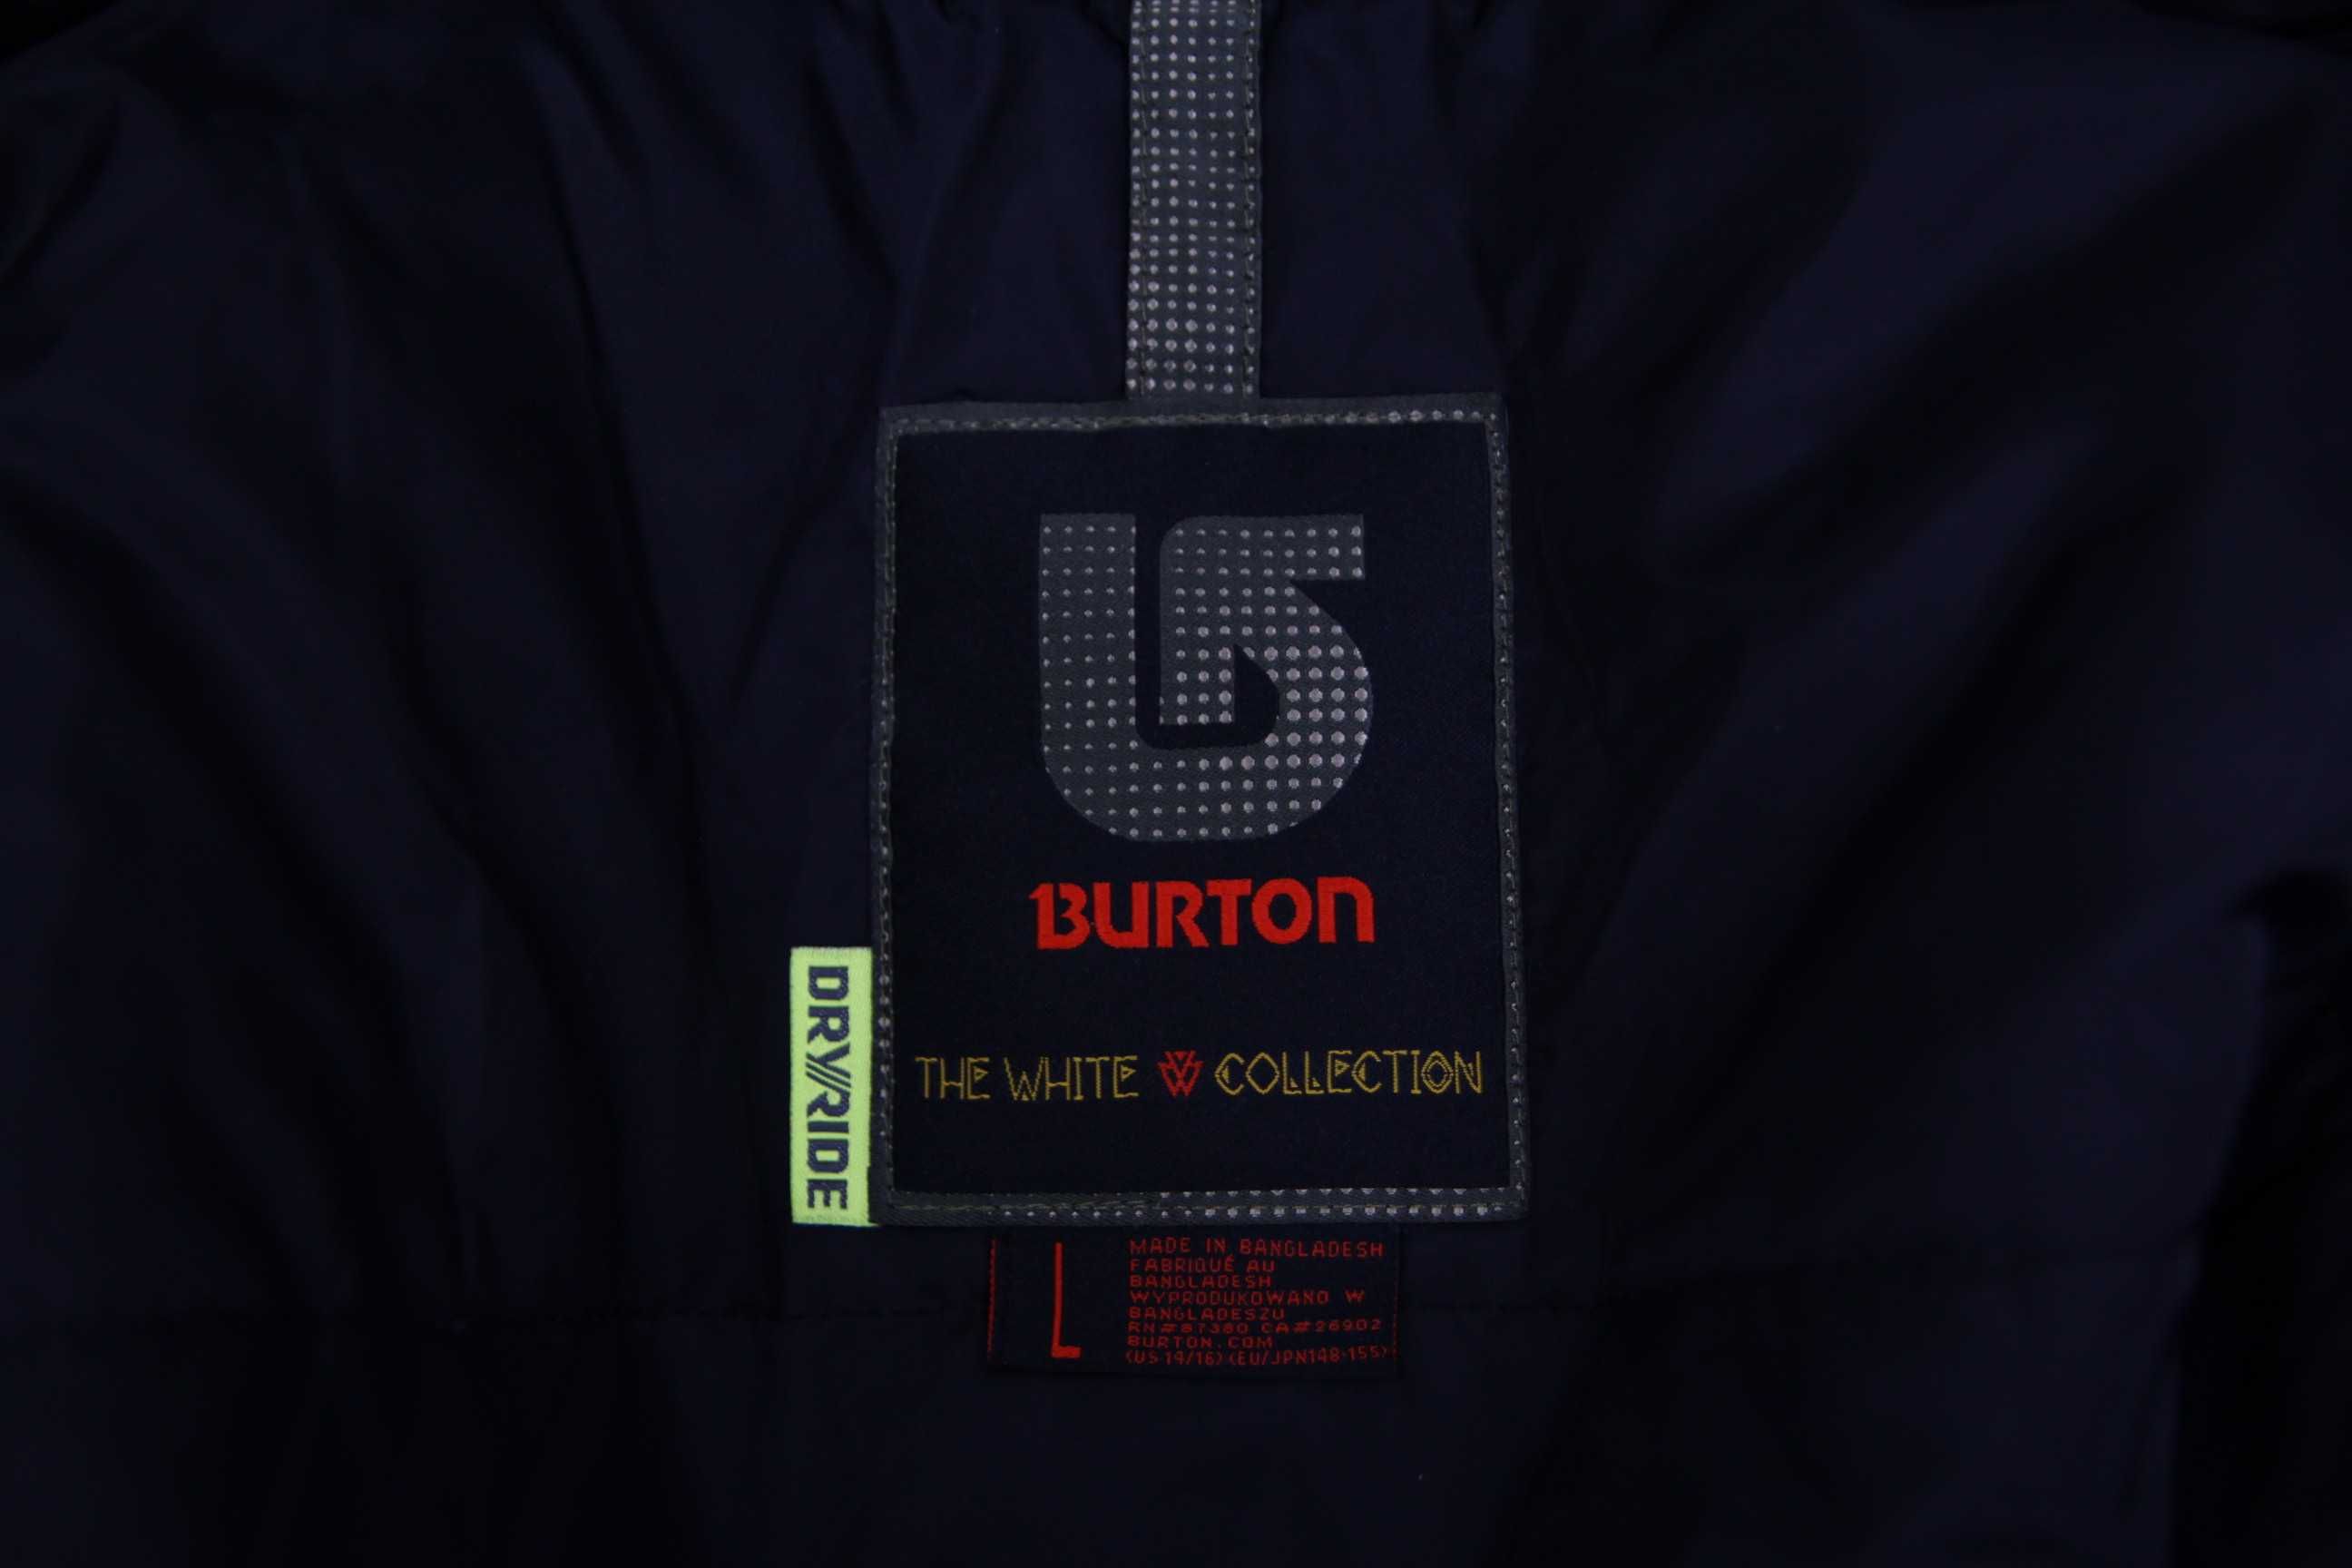 Burton chłopięca kurtka narciarska rozmiar L 14/16 lat